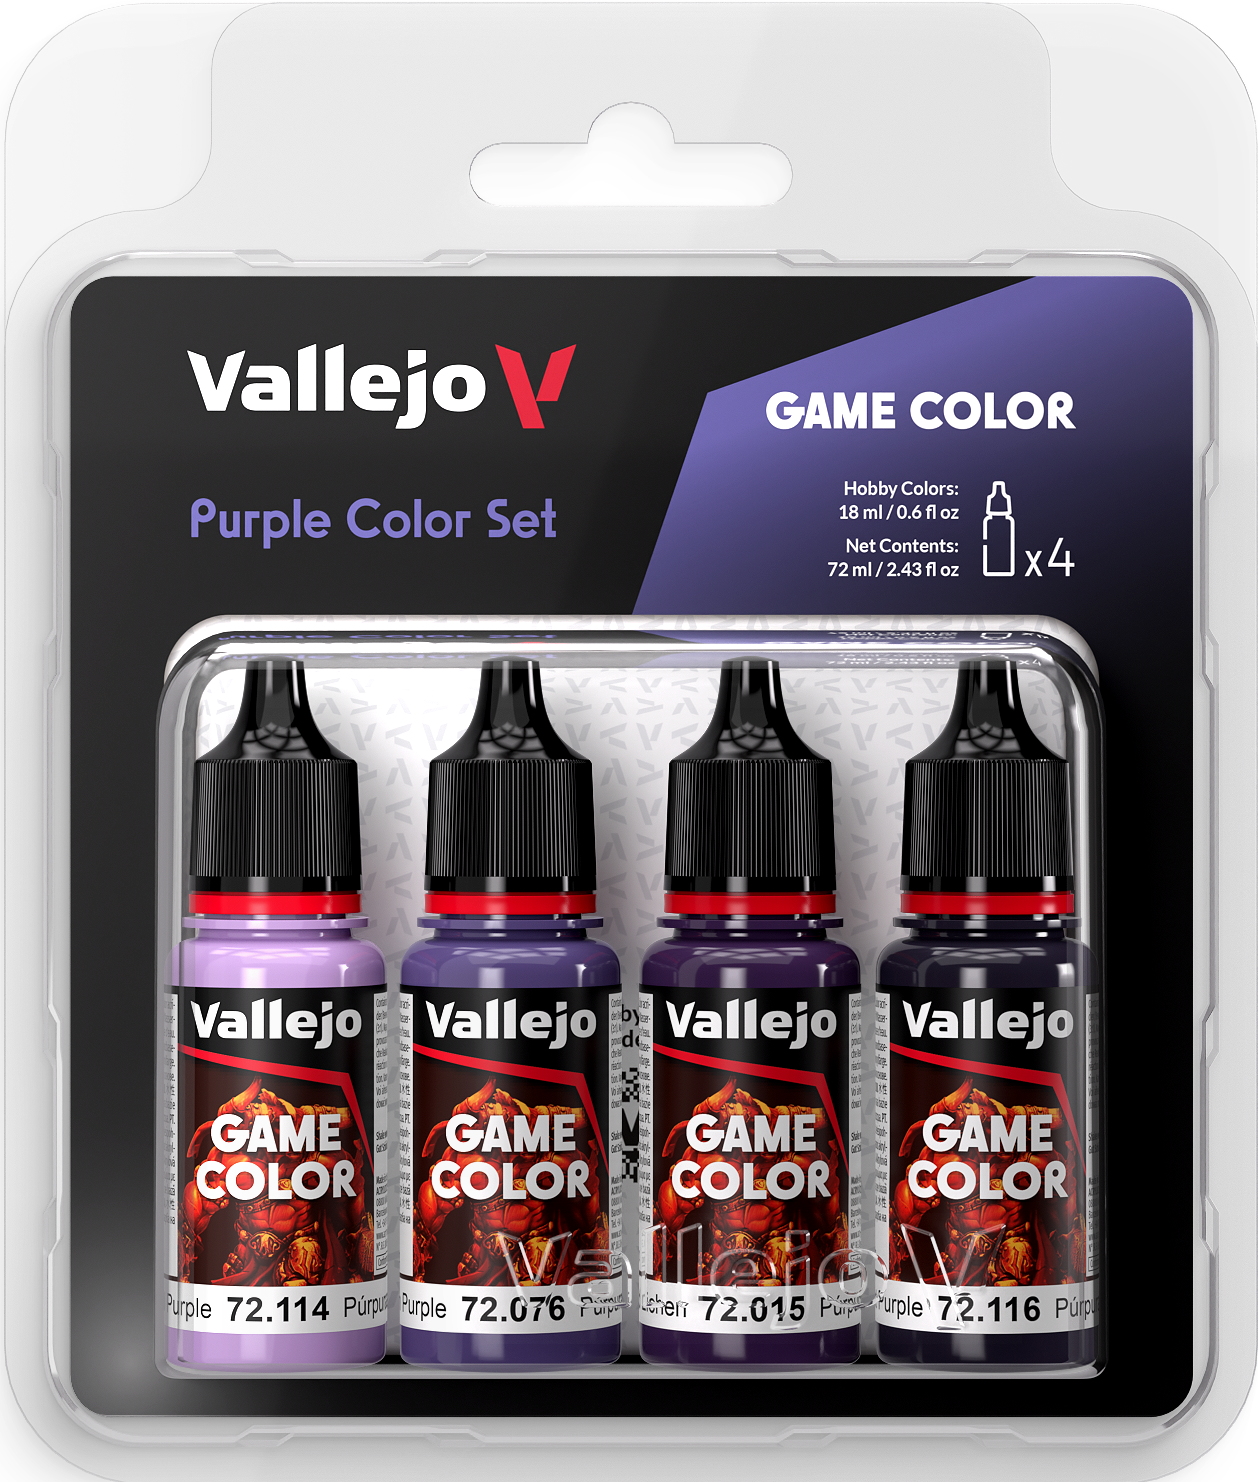 Vallejo Paint Game Color Paint Set in Plastic Storage Case (72